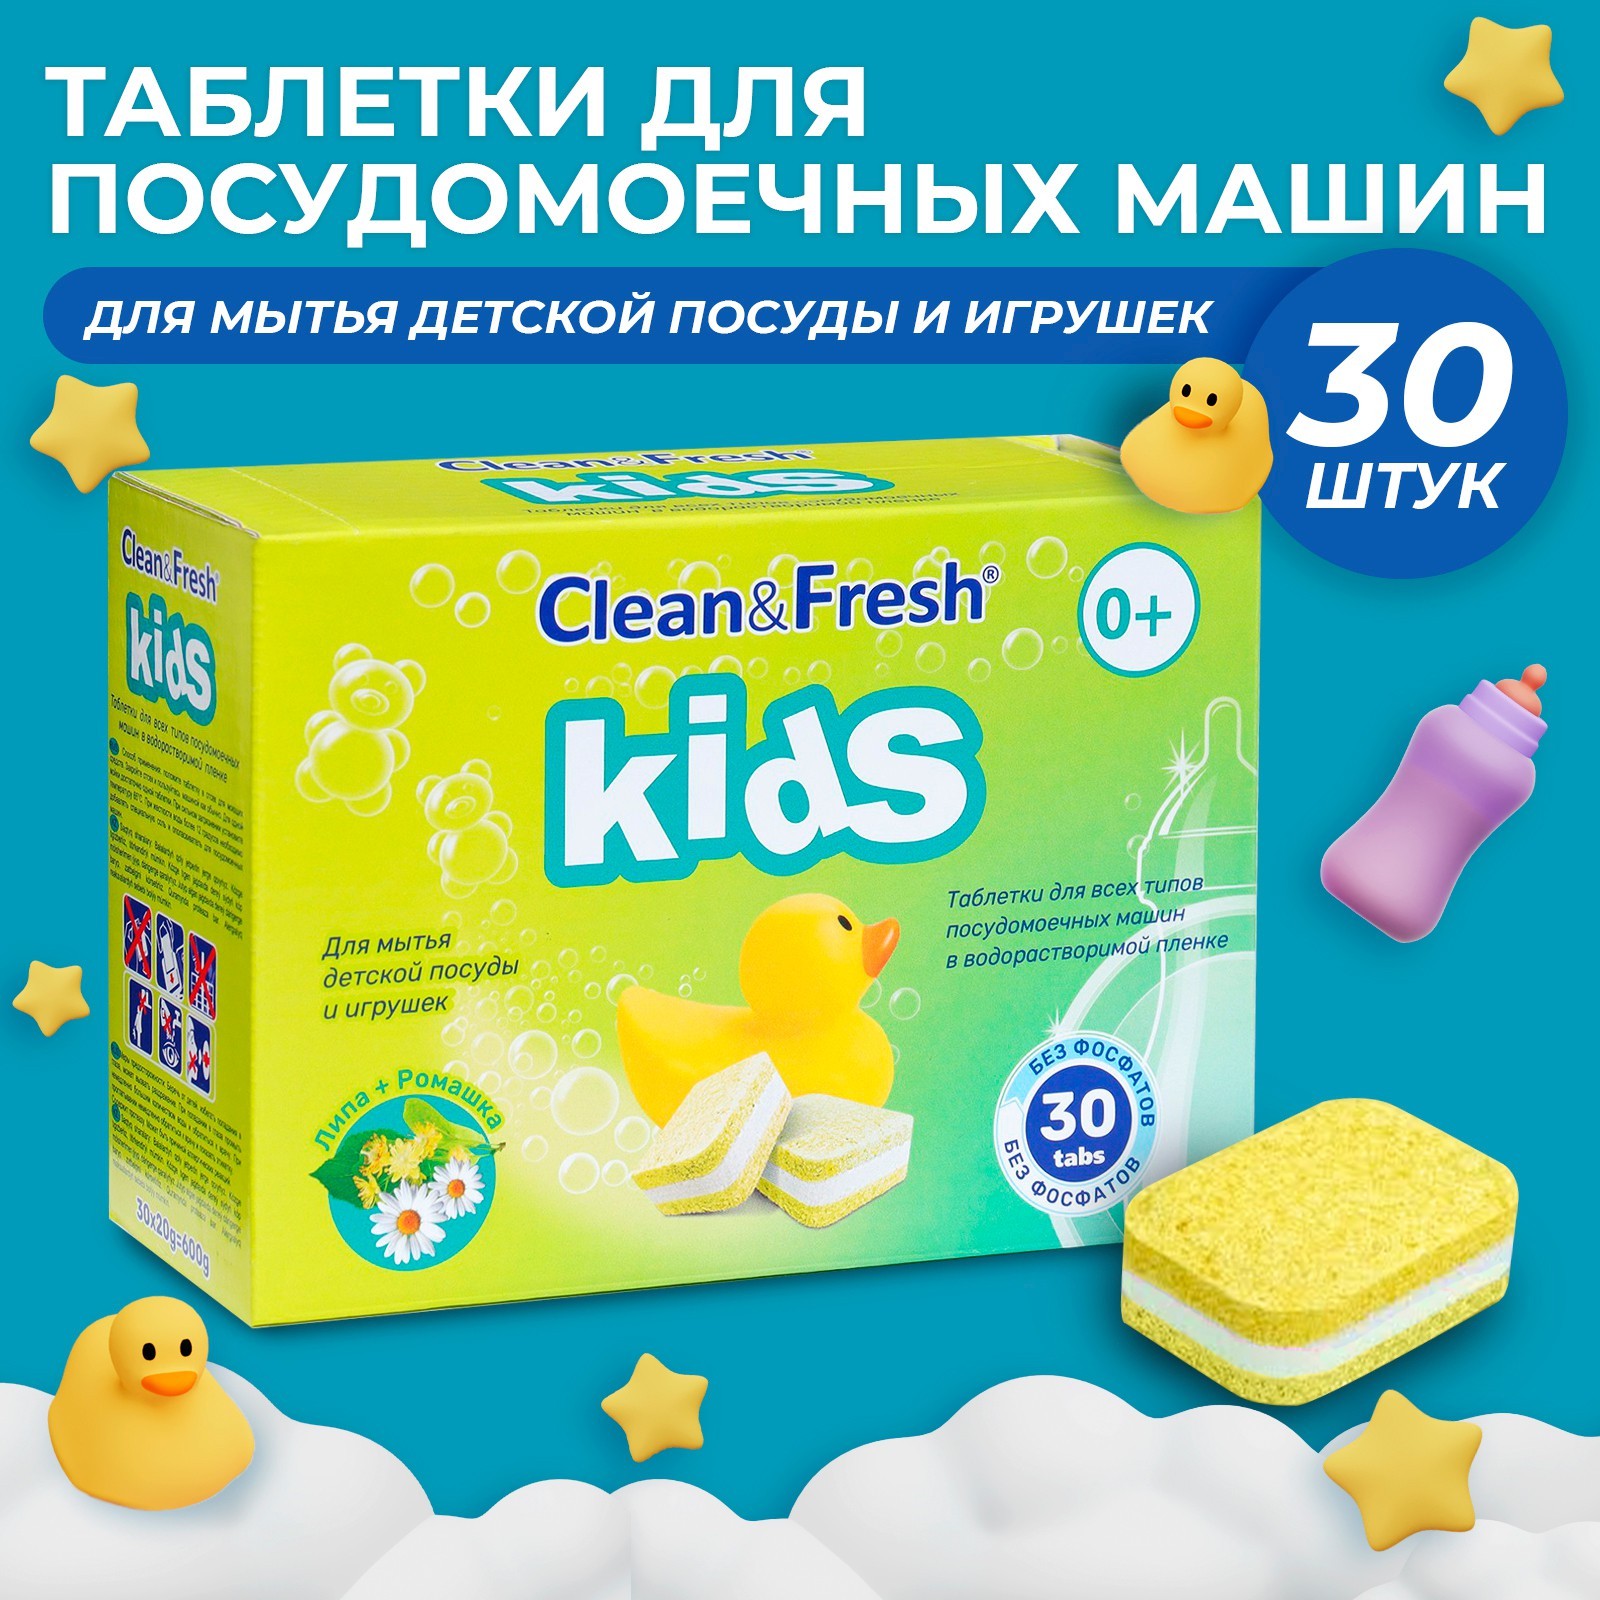 Таблетки для посудомоечных машин Clean & Fresh Kids All in 1, 30 шт средство обезжиривающее electrolux super clean для посудомоечных машин 2 пакетика по 50 г